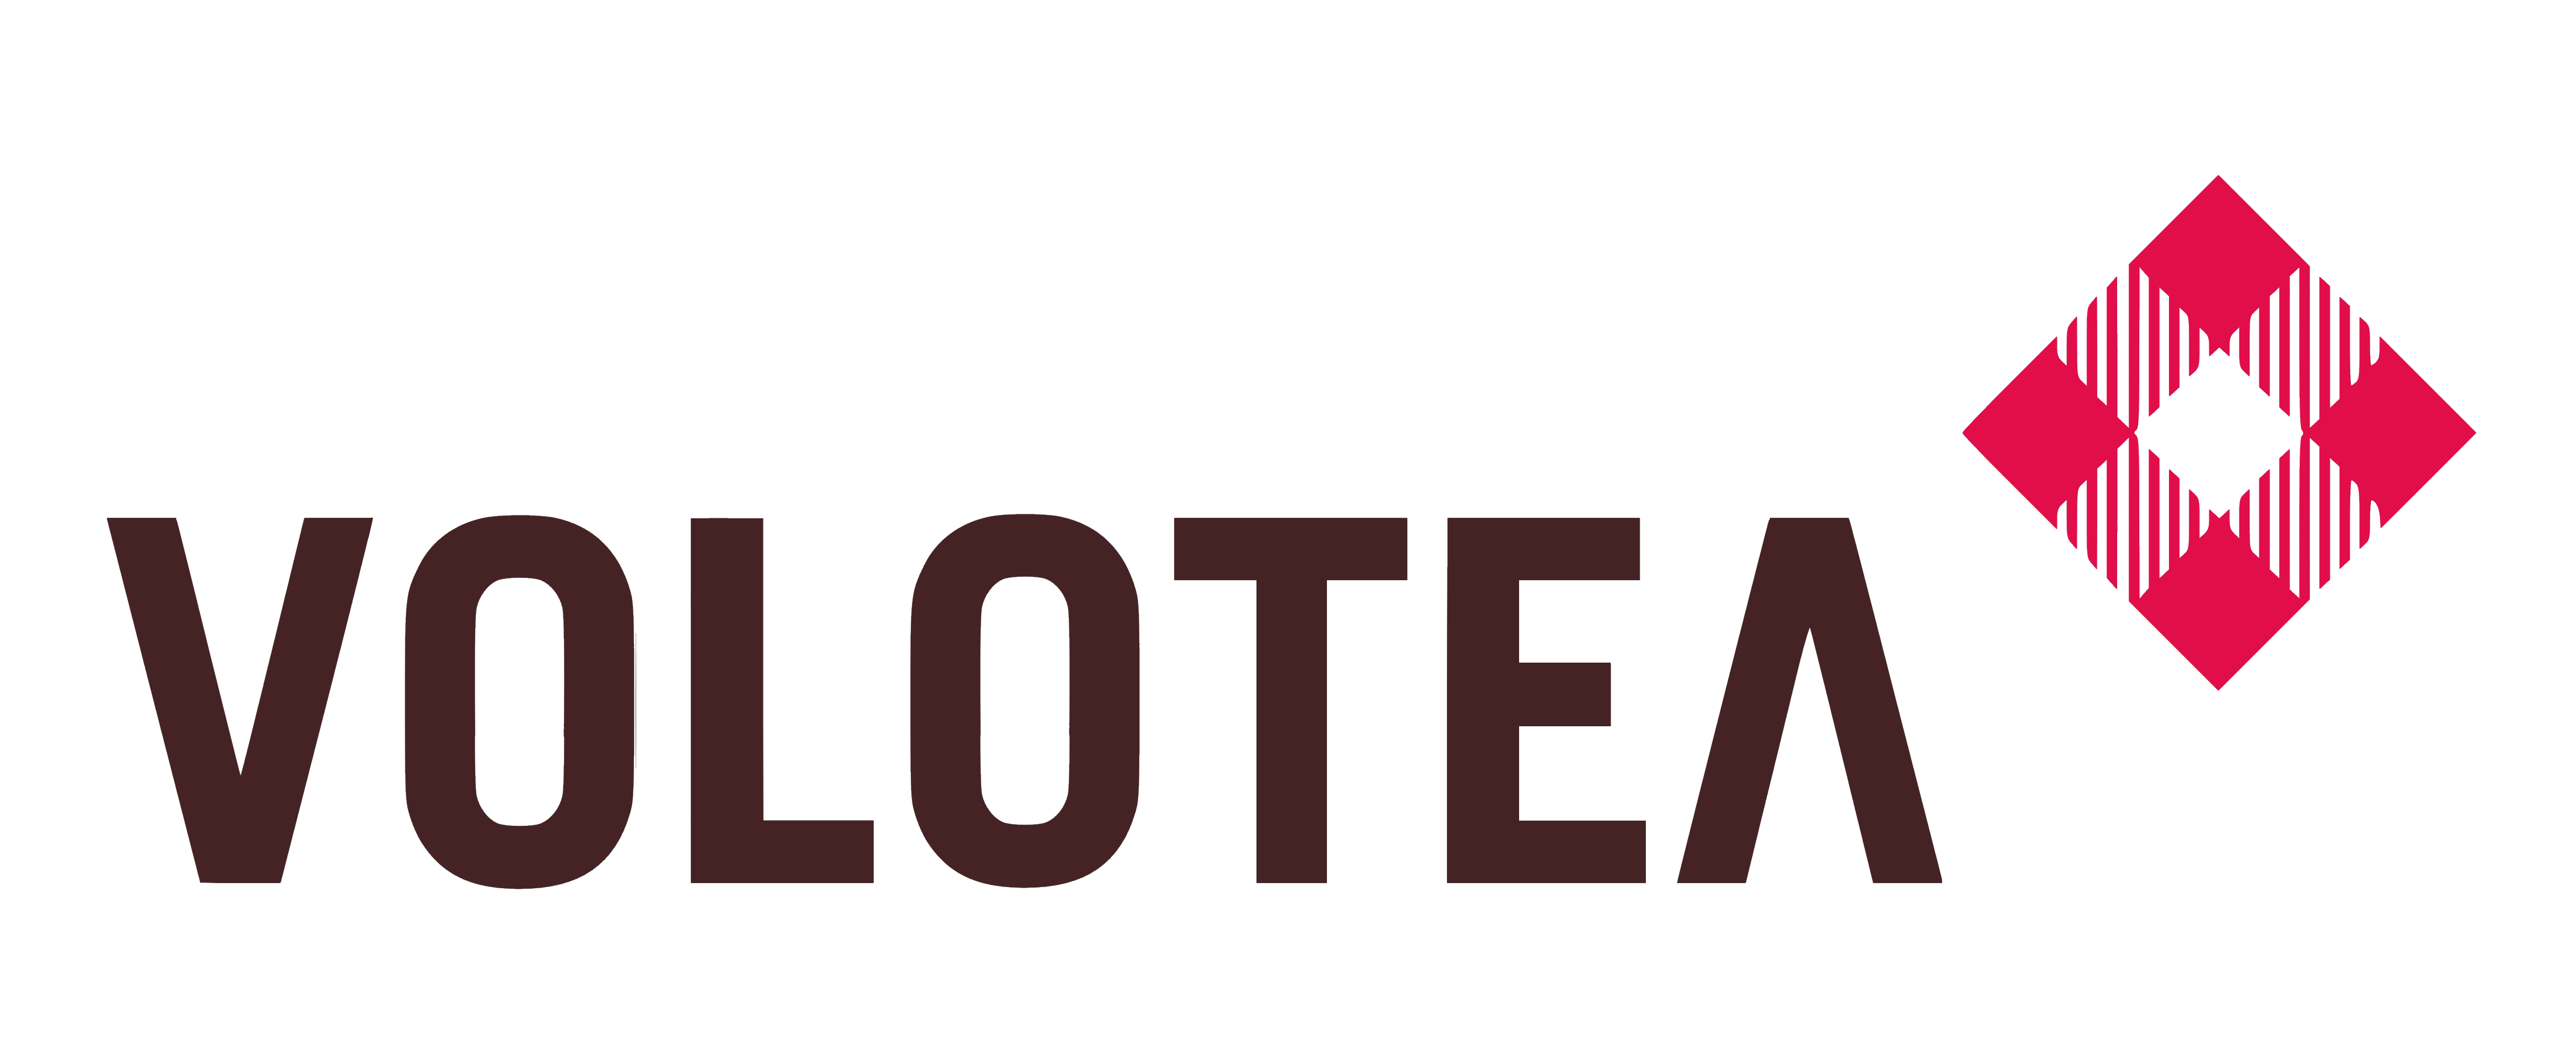 Volotea logo, logotype